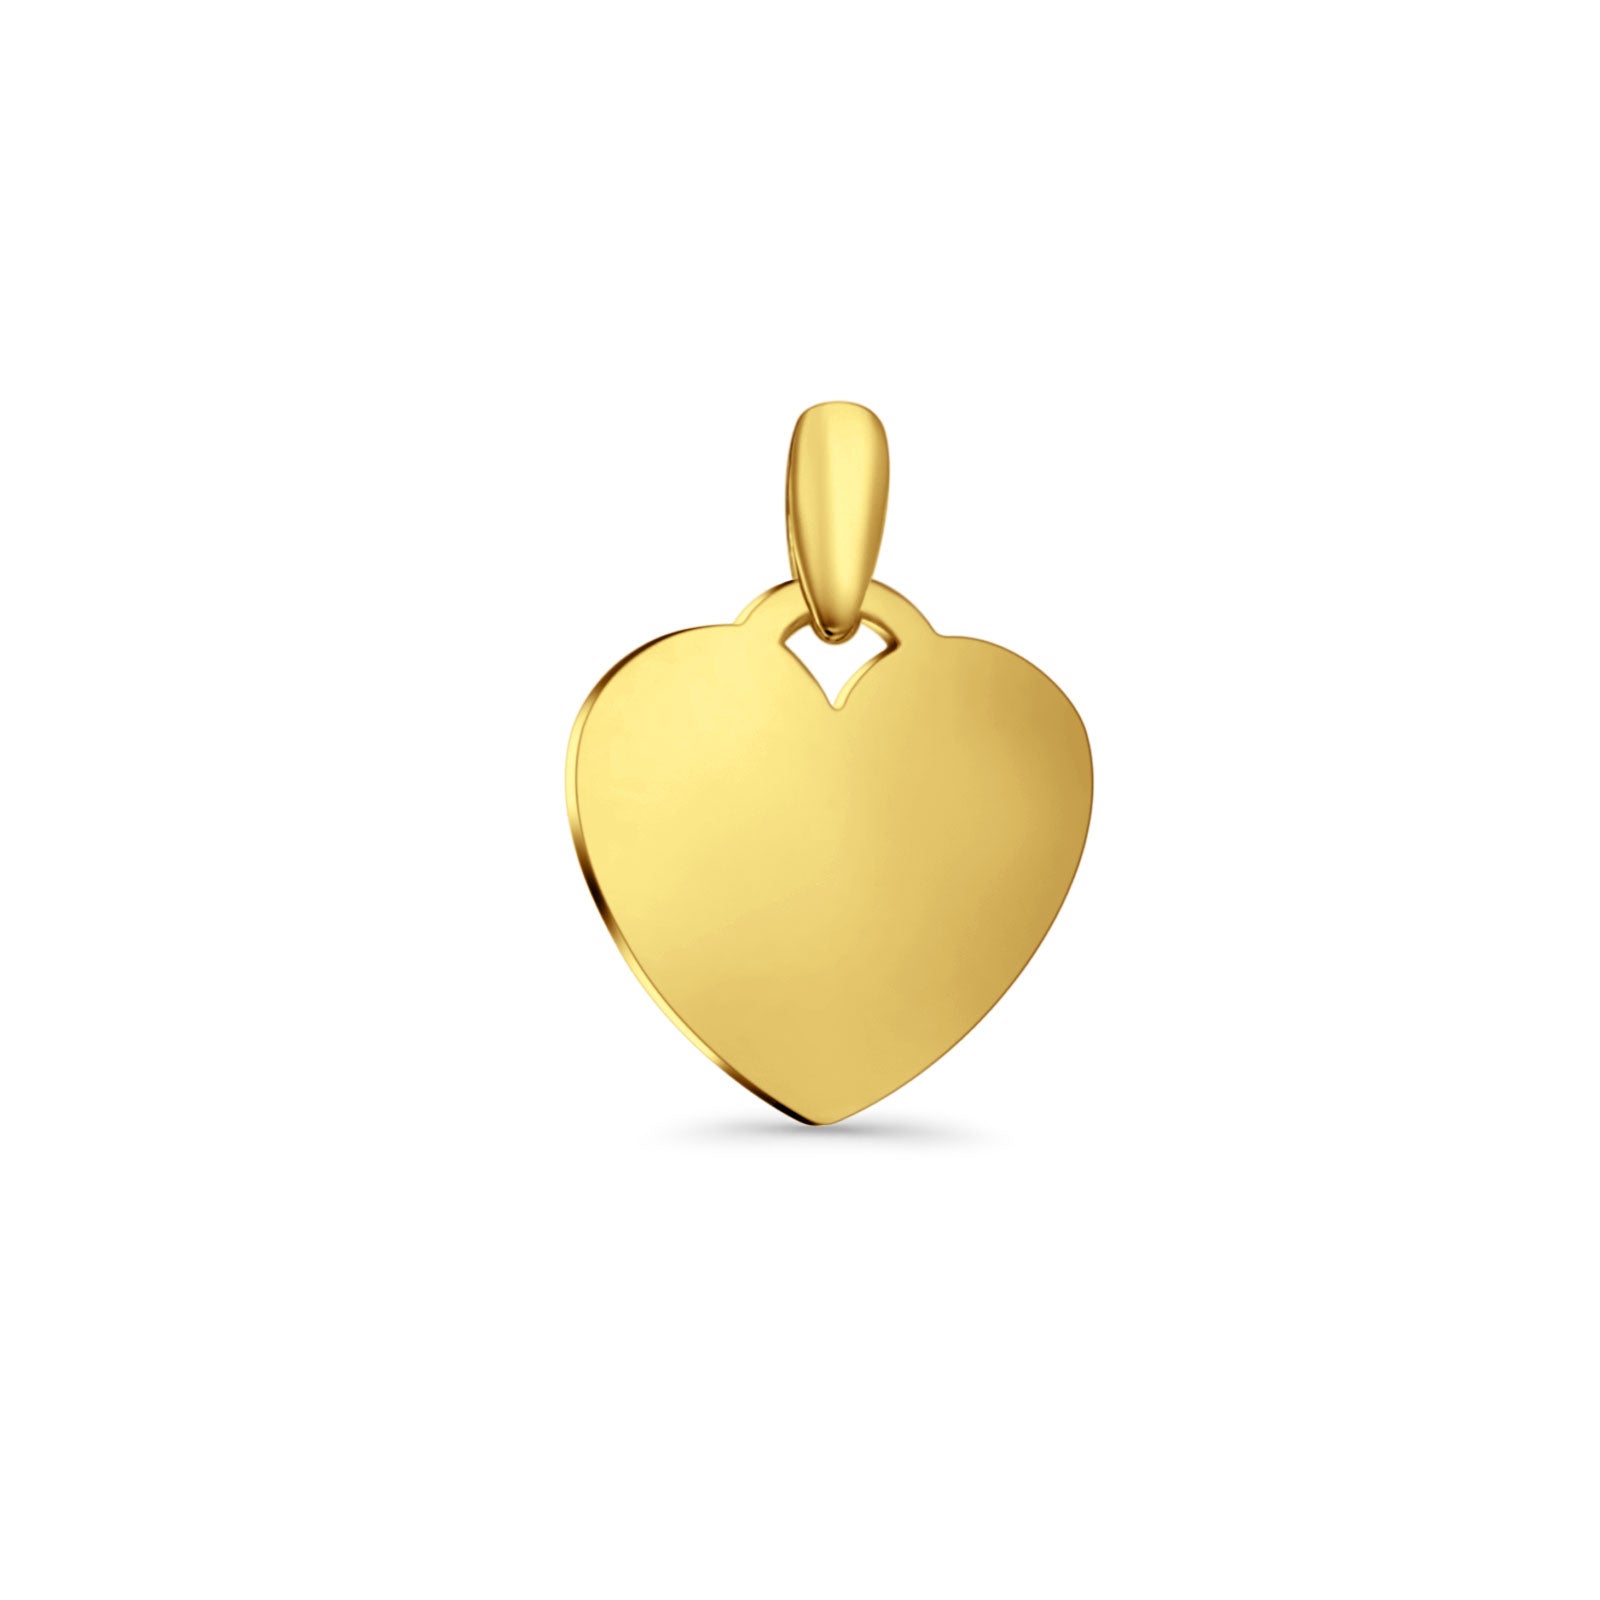 14K Yellow Gold Engravable Heart Pendant 24mmX17mm 2.0 grams